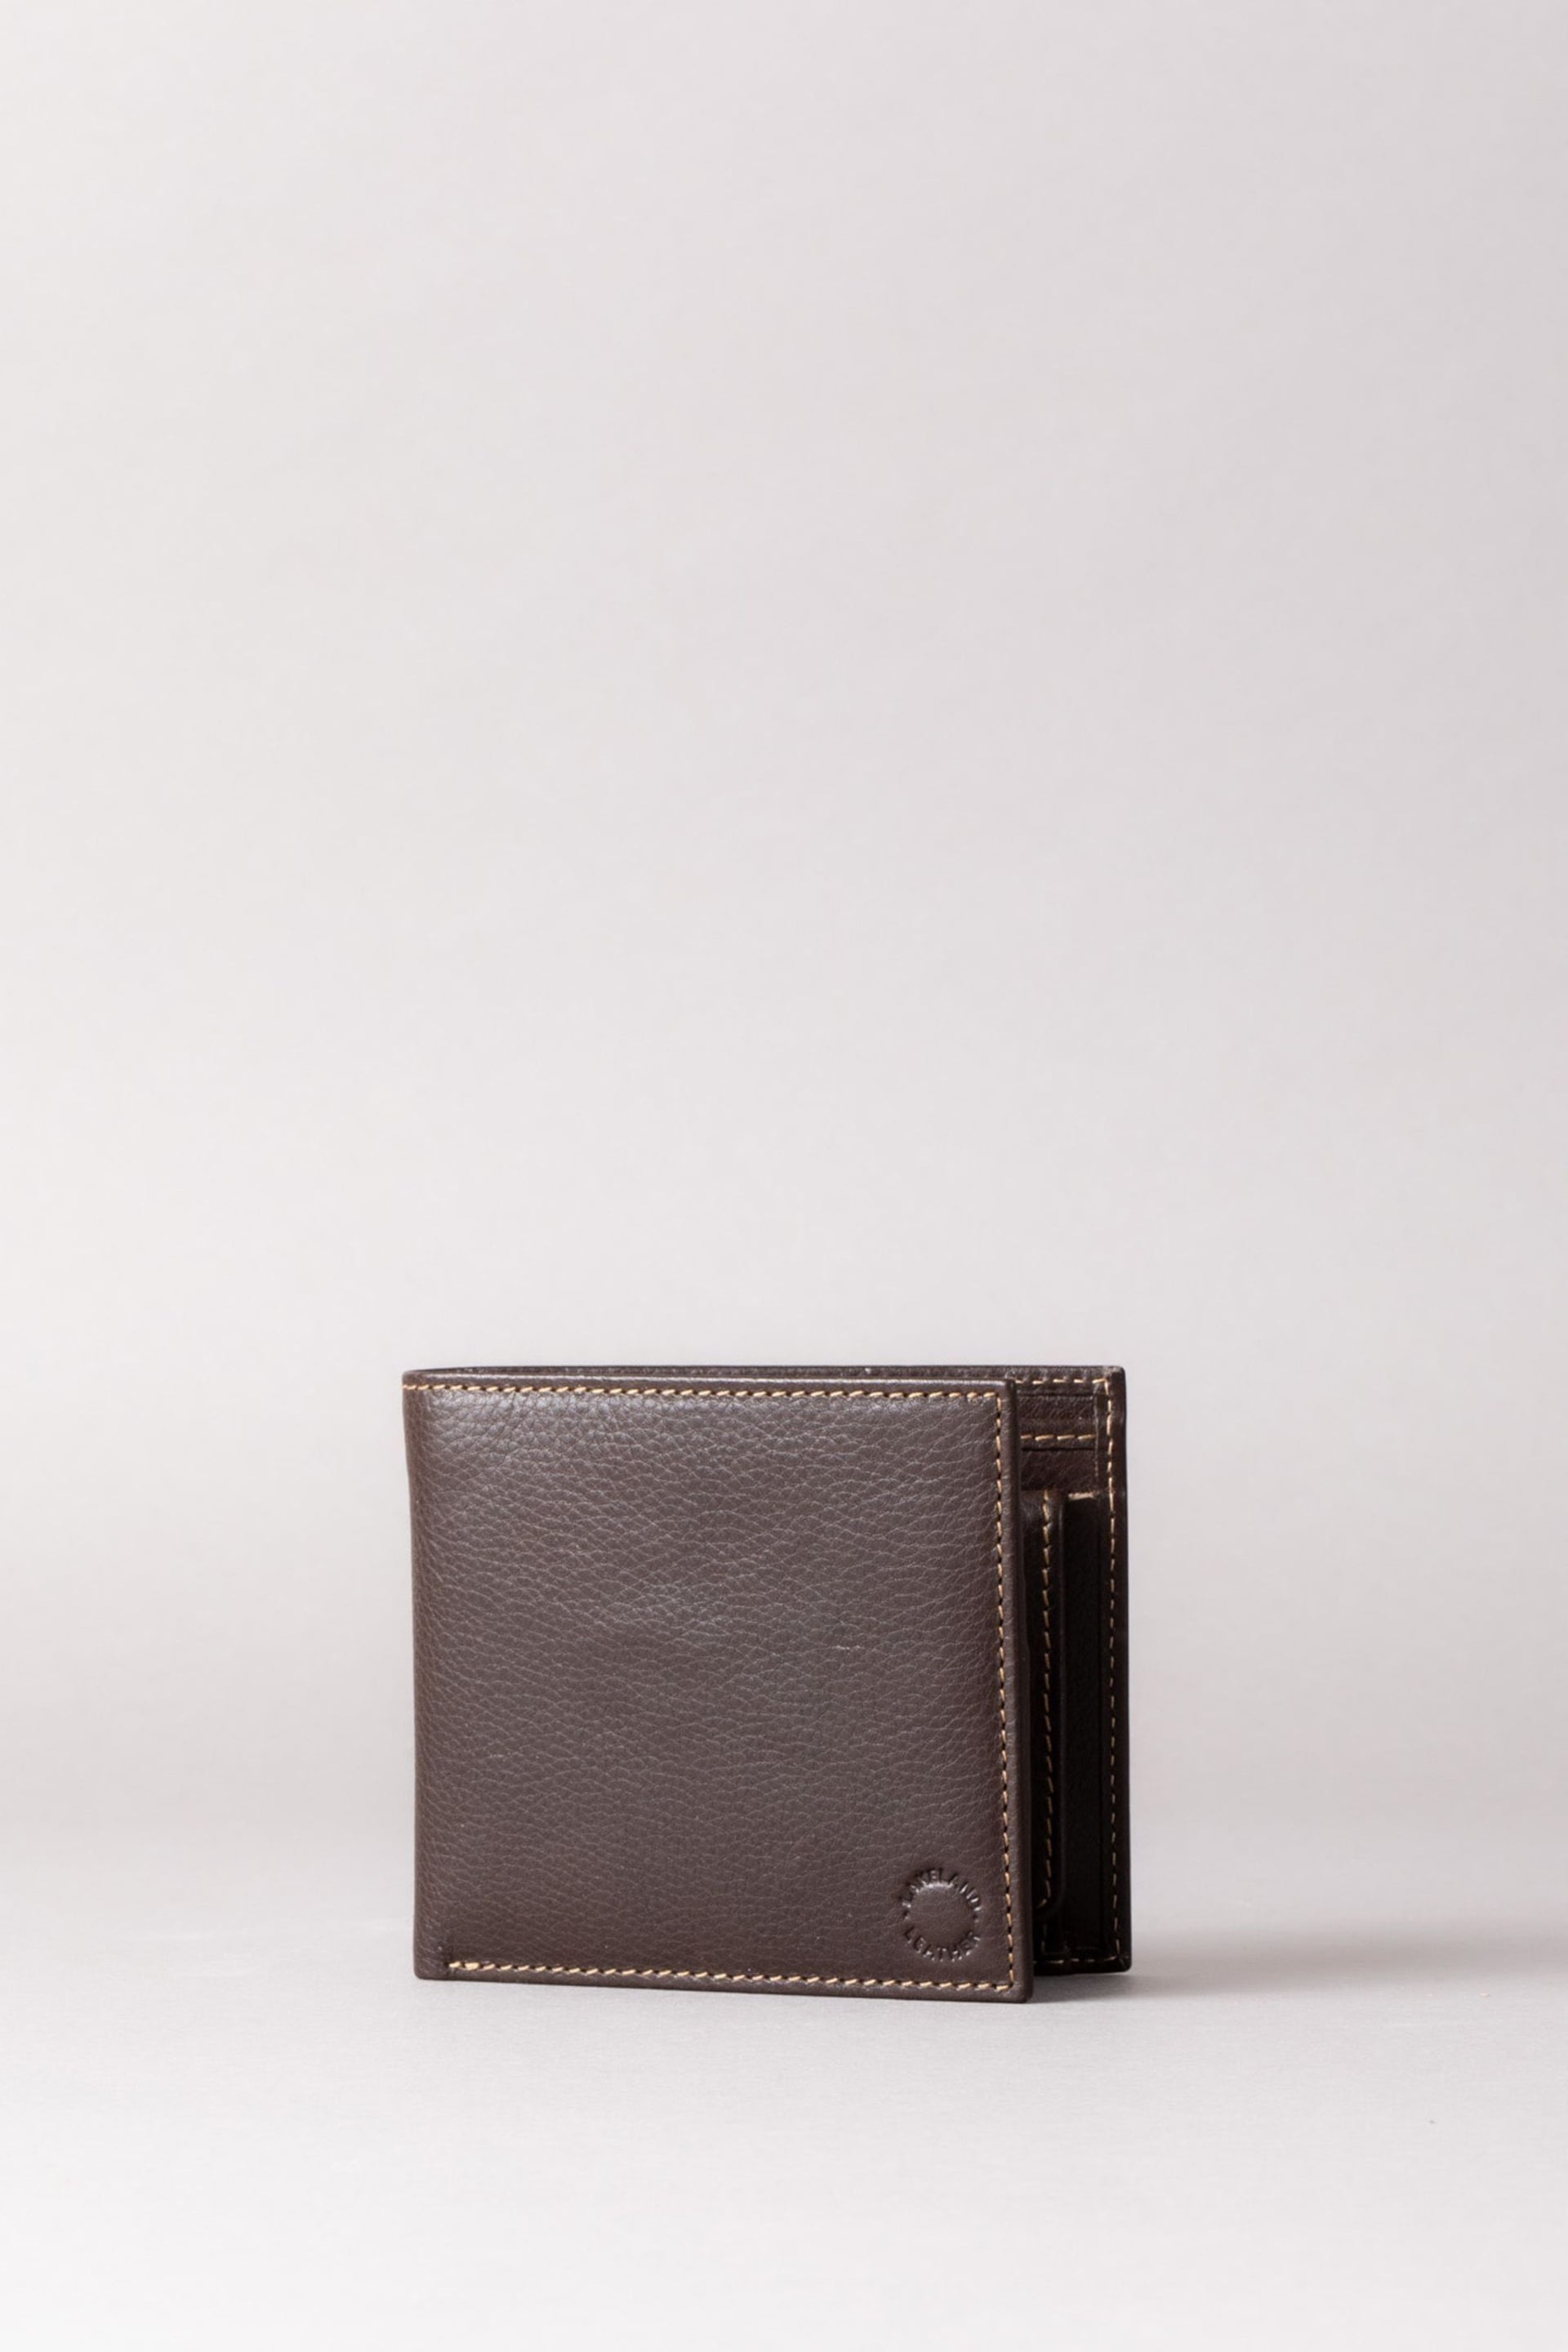 Lakeland Leather Brown Kelsick Leather Wallet - Image 1 of 7